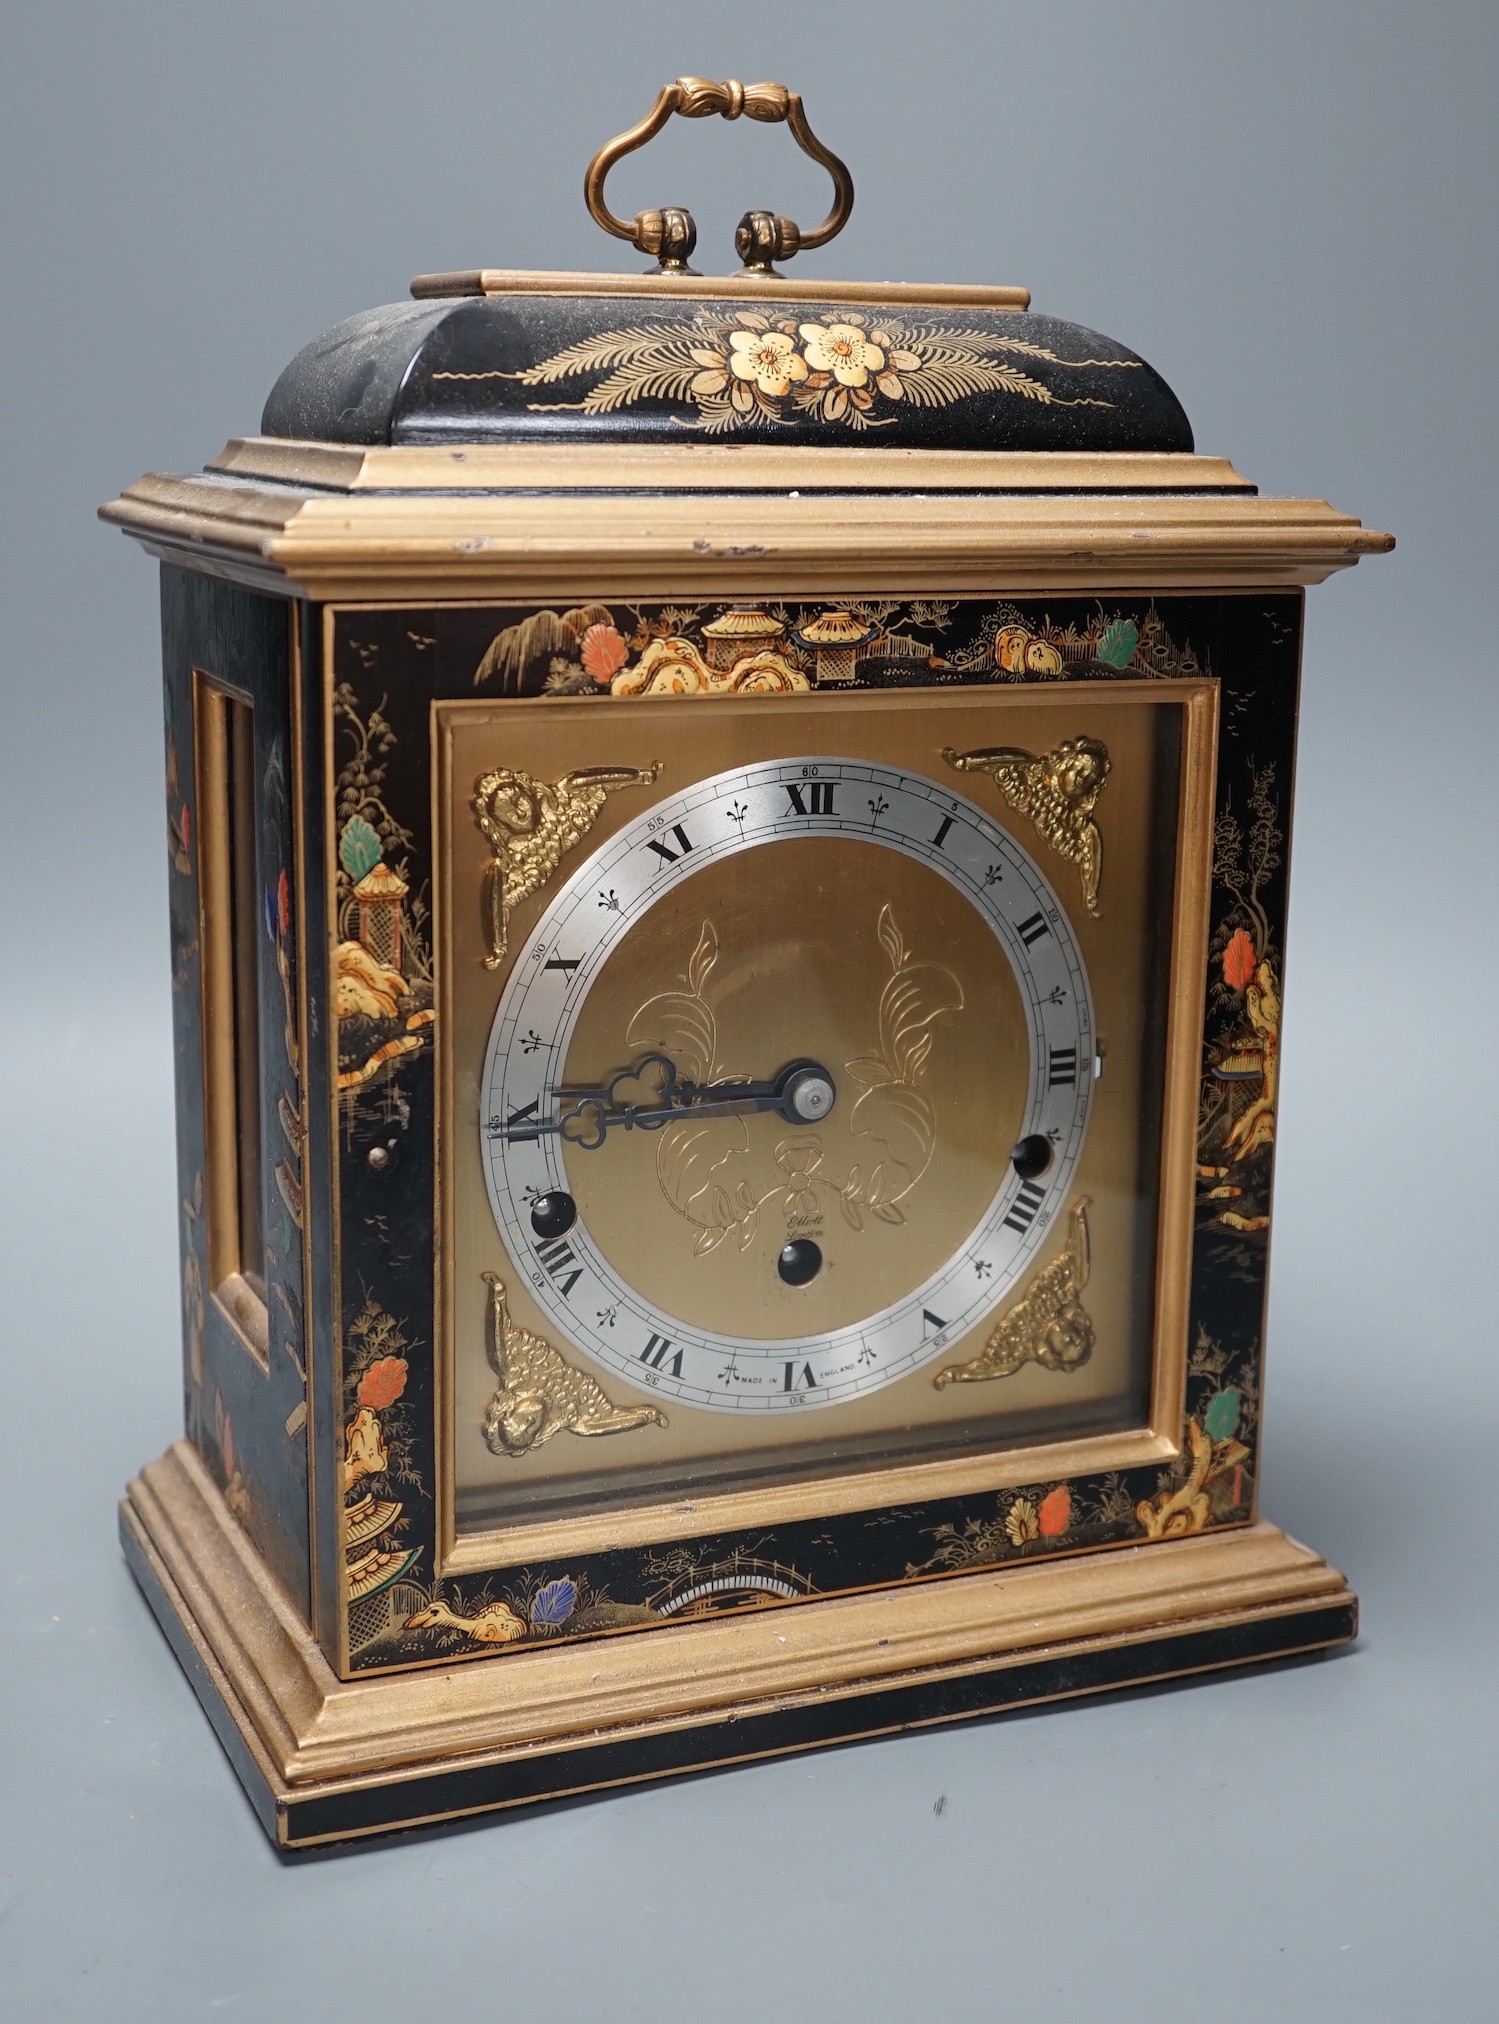 A F.W. Elliott japanned mantel clock, with chiming mechanism, 32 cms high